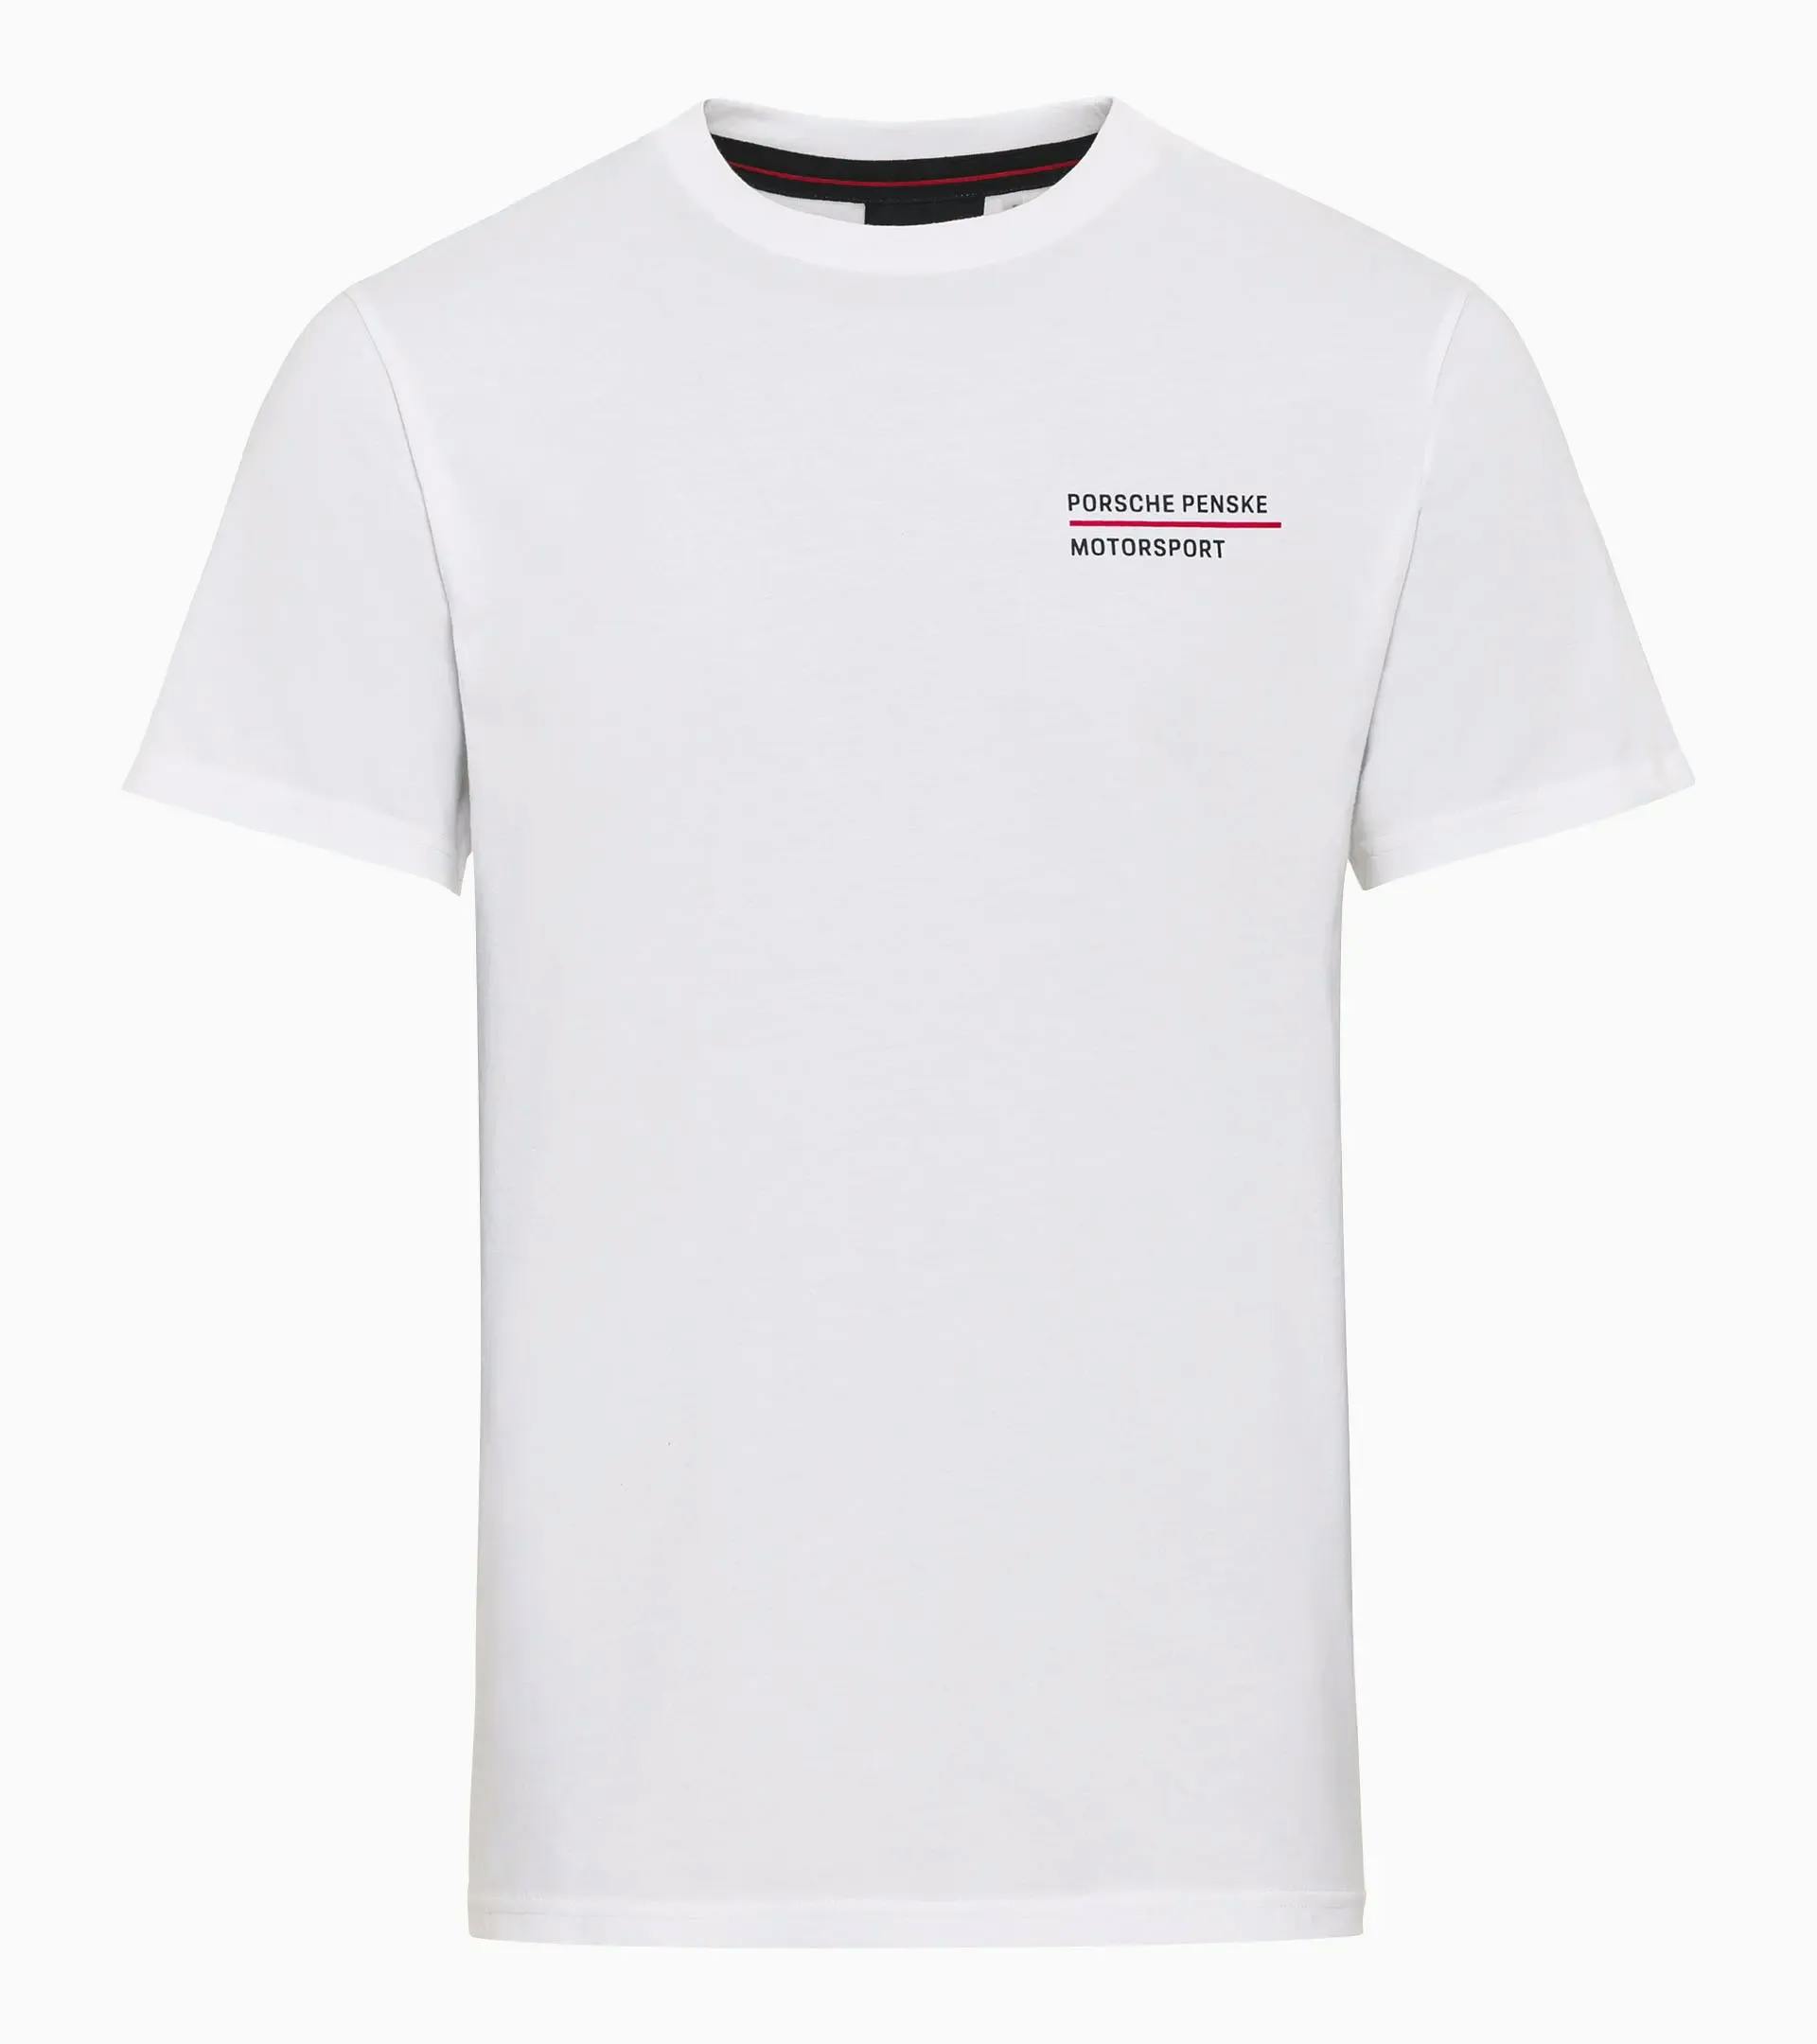 T-Shirt Unisex – Porsche Penske Motorsport 2